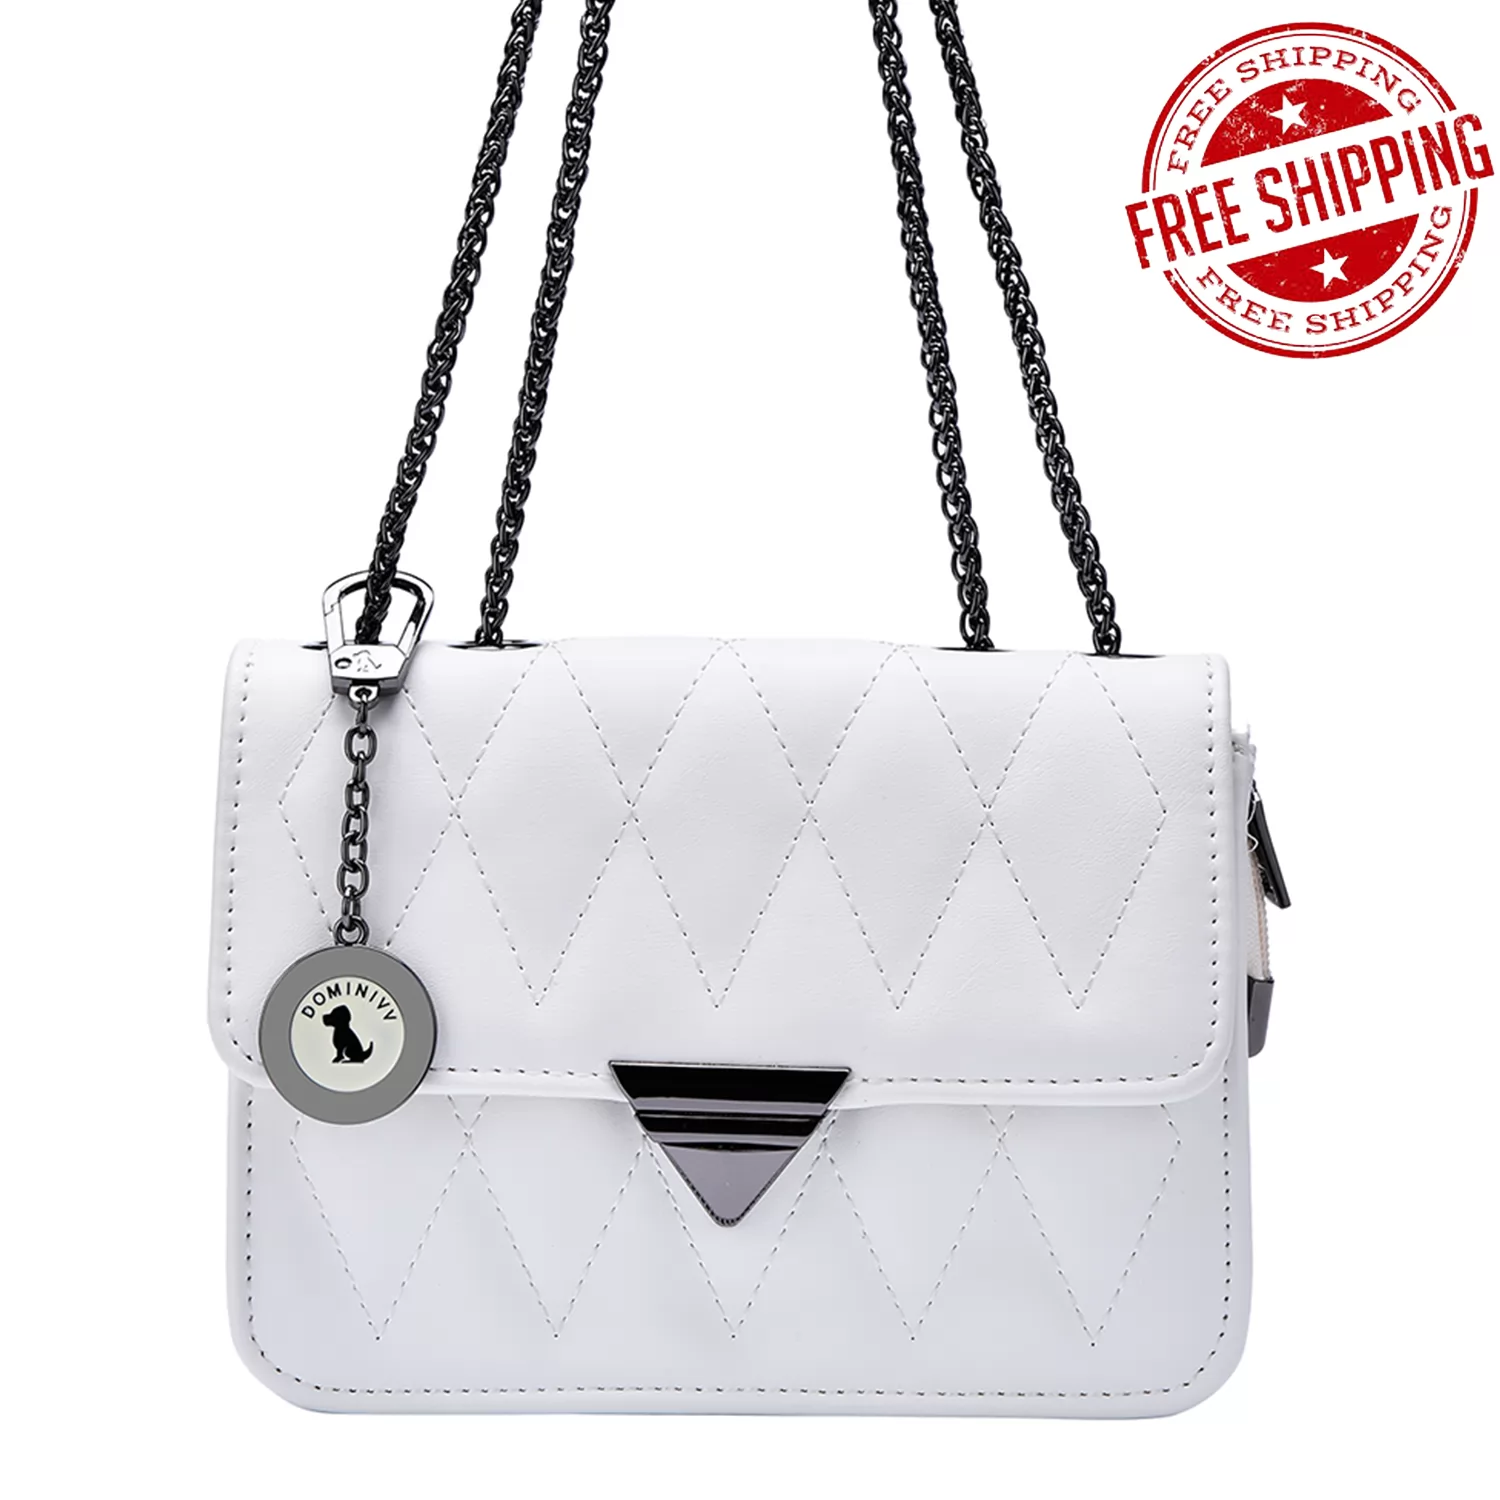 Dominivv Handbag-Shoulder Bag-White & Elegant